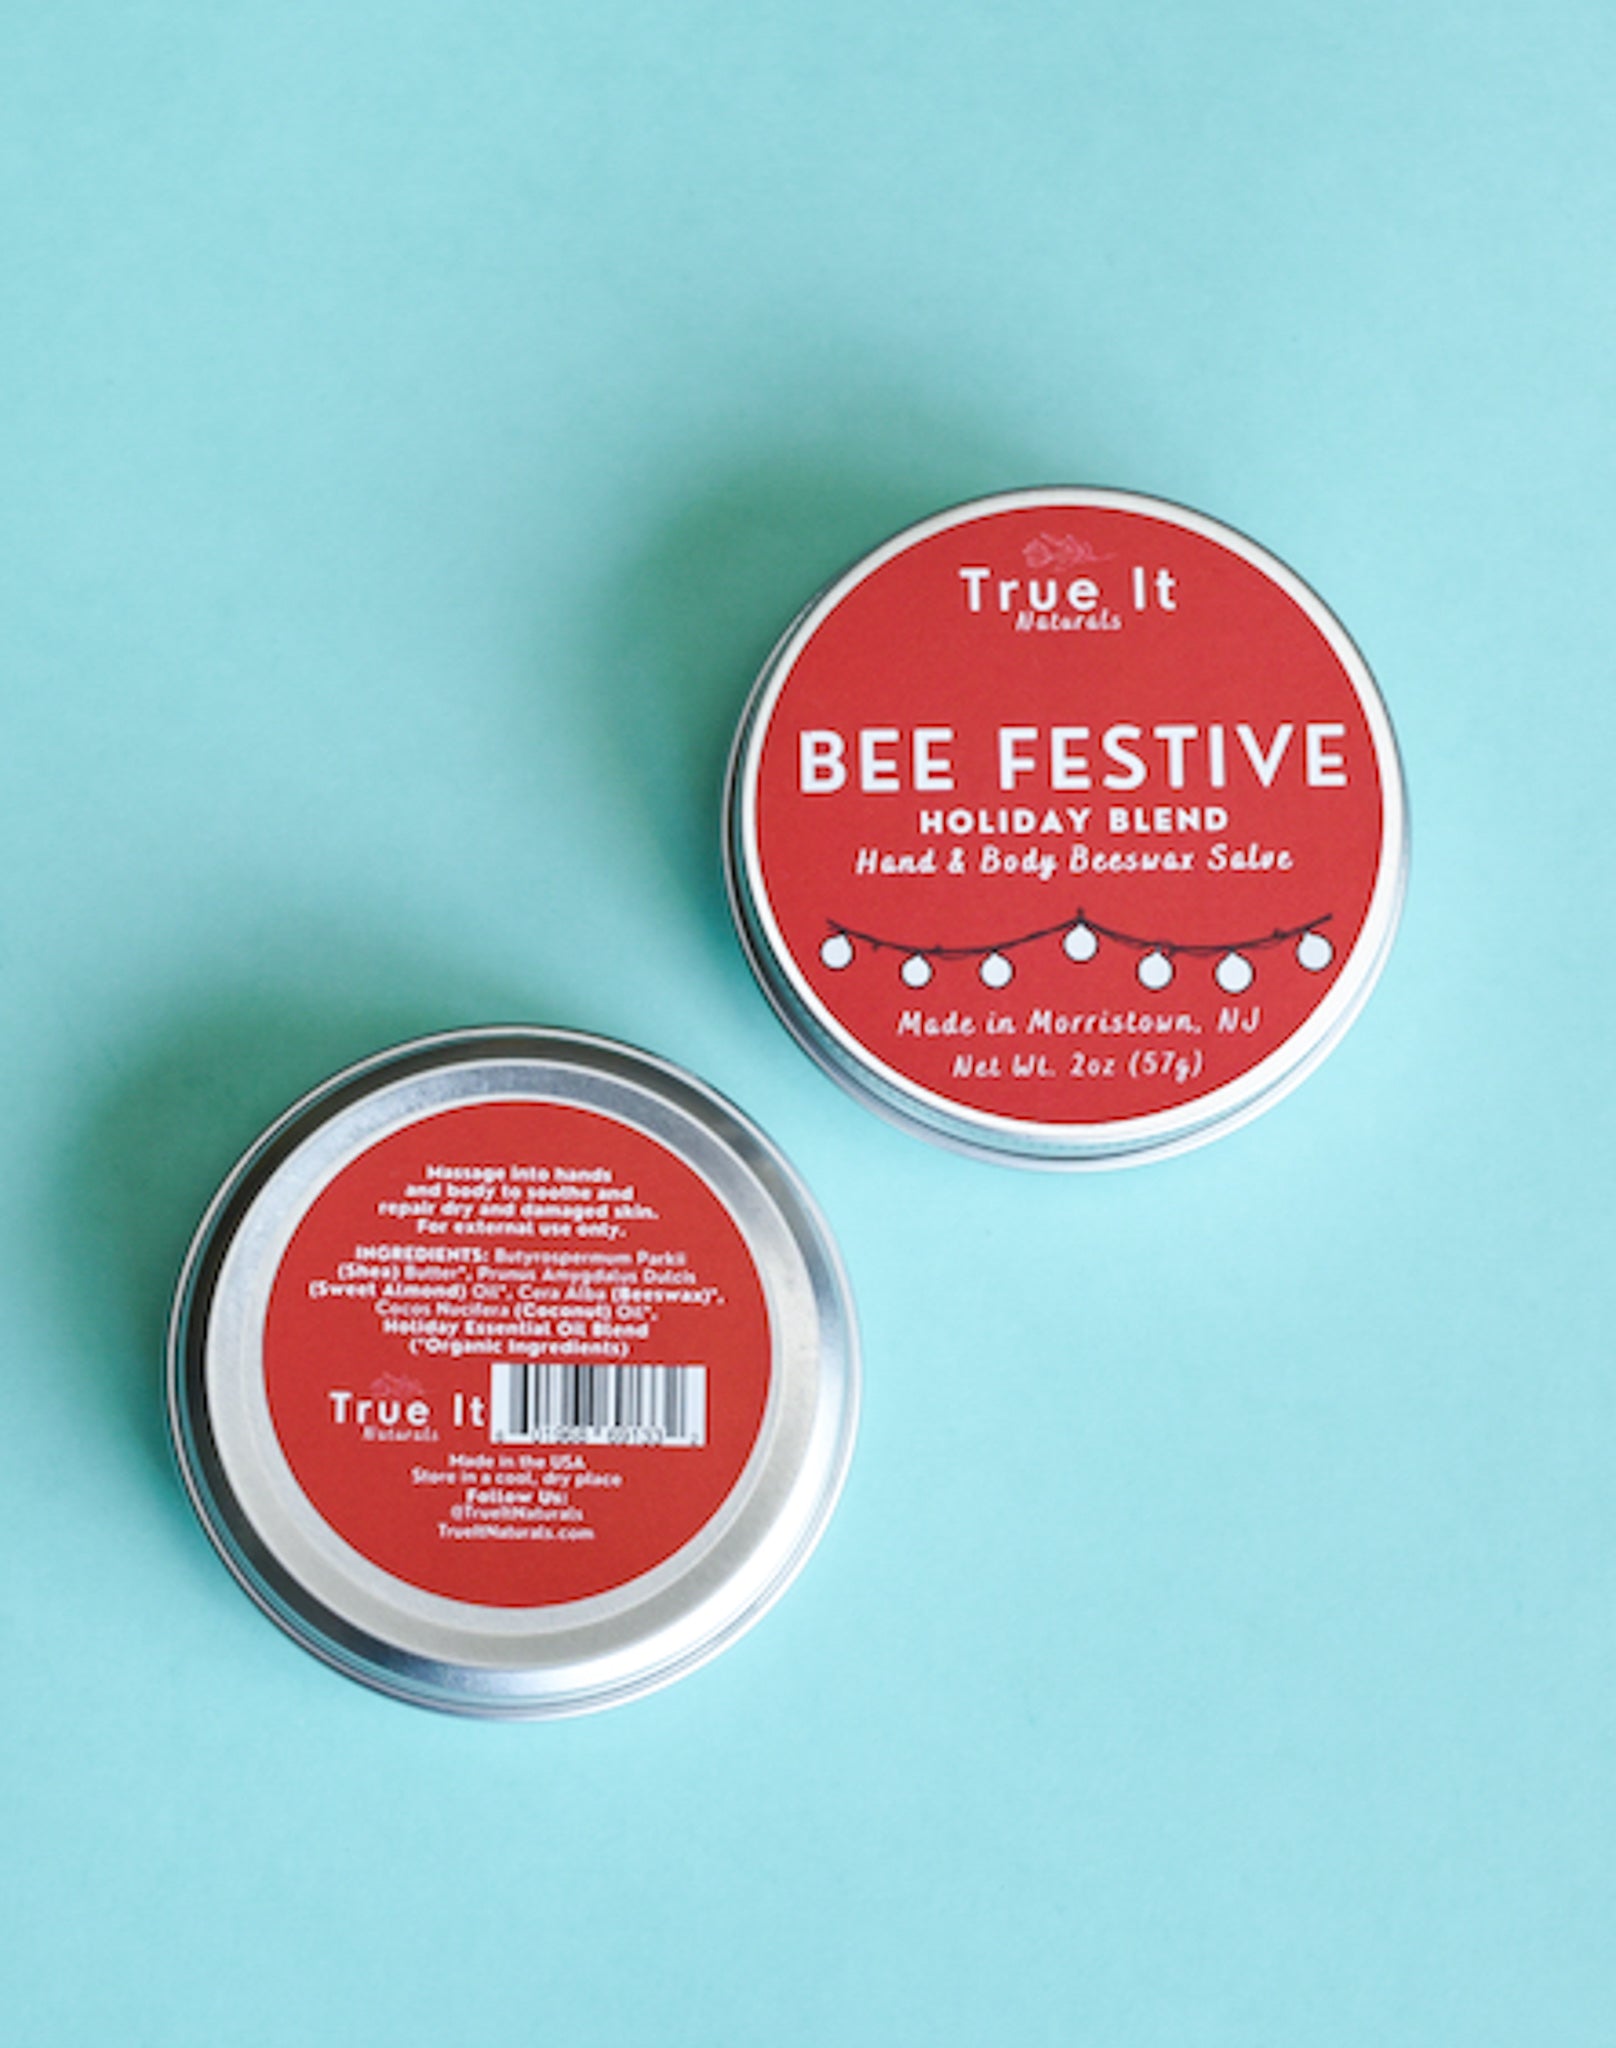 Holiday Local Organic Beeswax Salve - Bee Festive - 2 oz